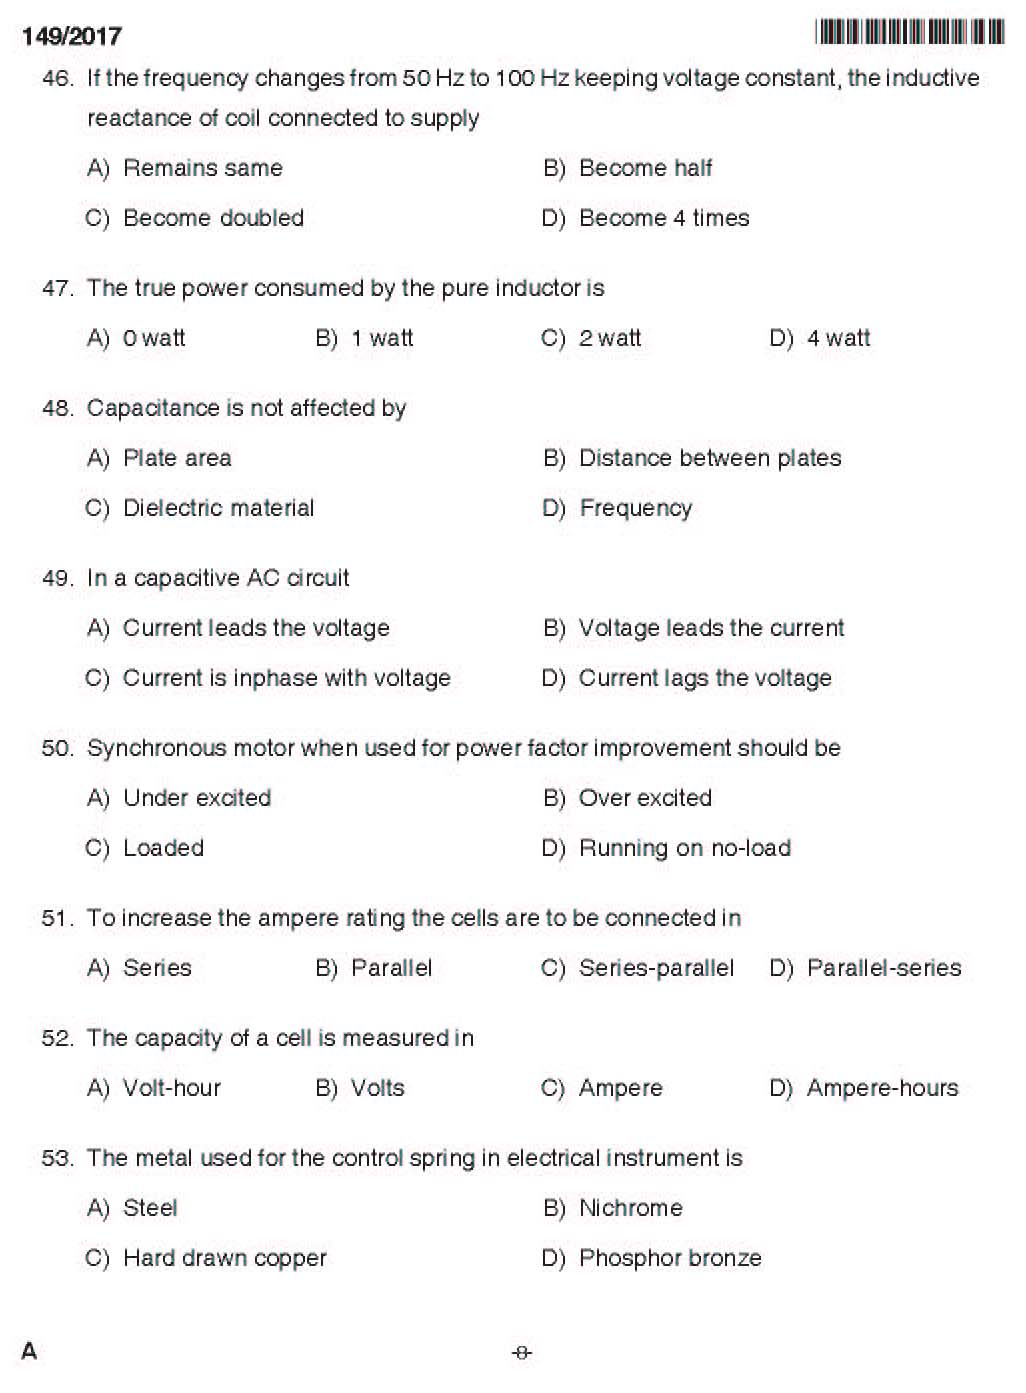 Kerala PSC Electrician Exam 2017 Question Paper Code 1492017 7